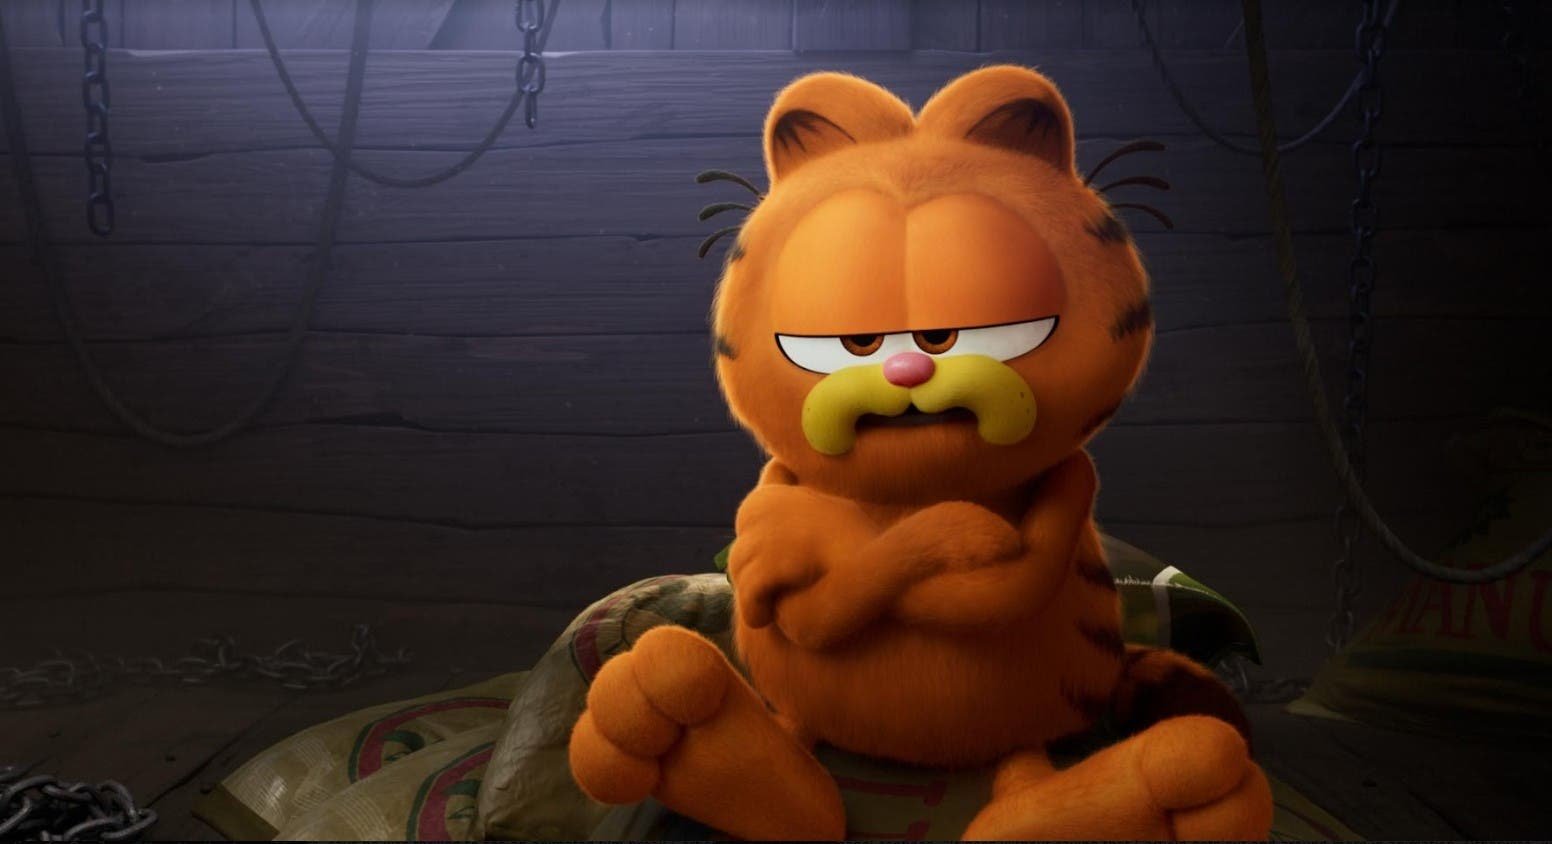 Garfield Creator Jim Davis Talks About Chris Pratt as the Voice Behind his Beloved Character in ‘The Garfield Movie’